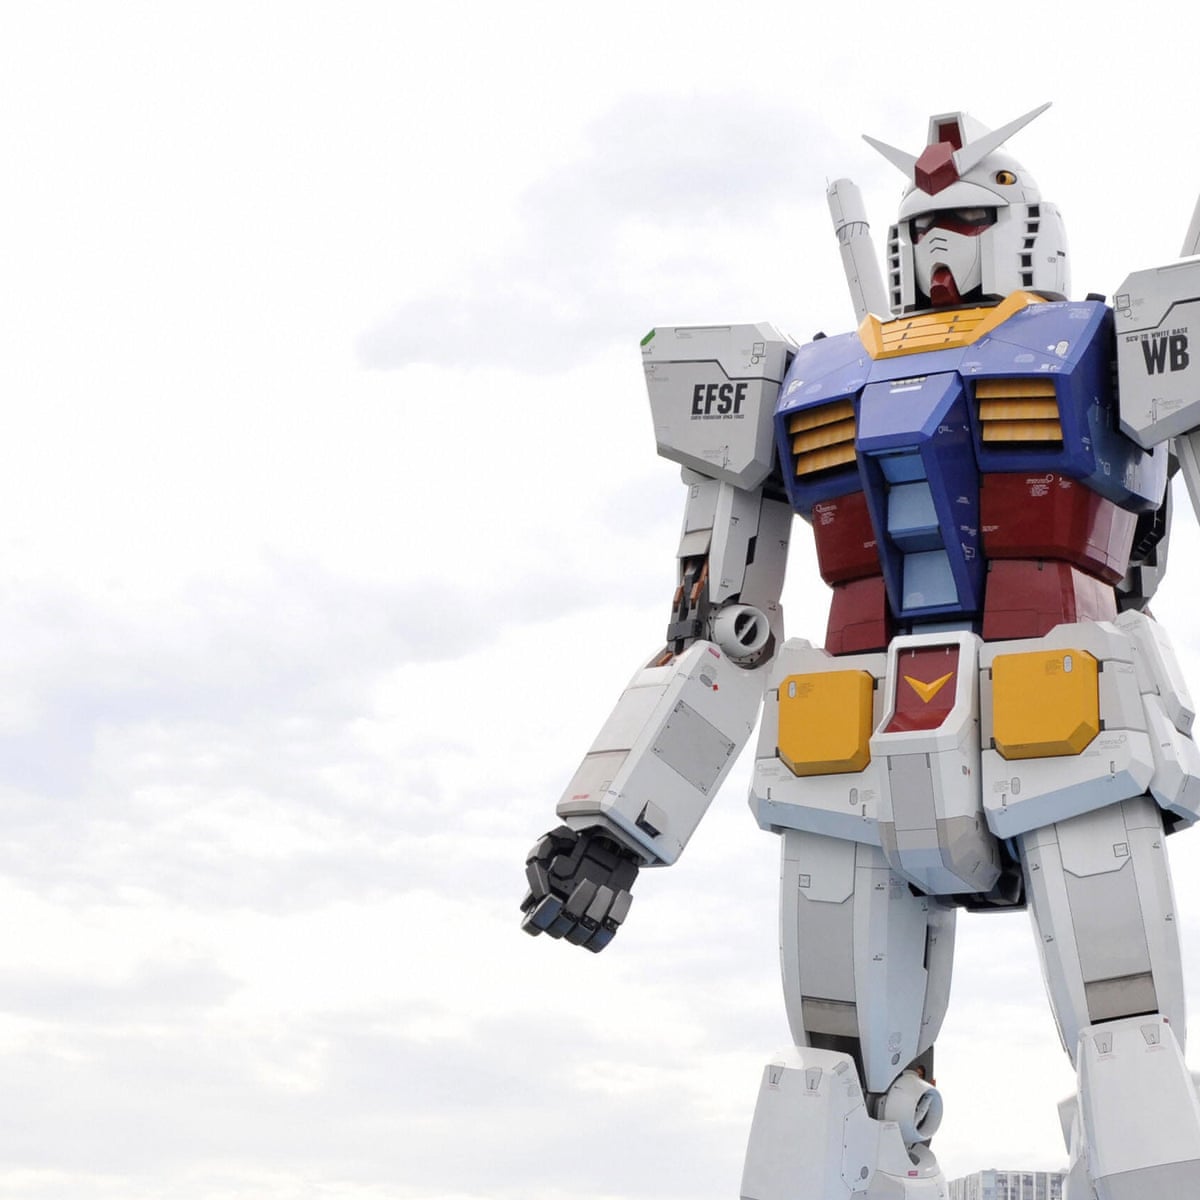 Dōmo arigatō, giant robotto - The Japan Times